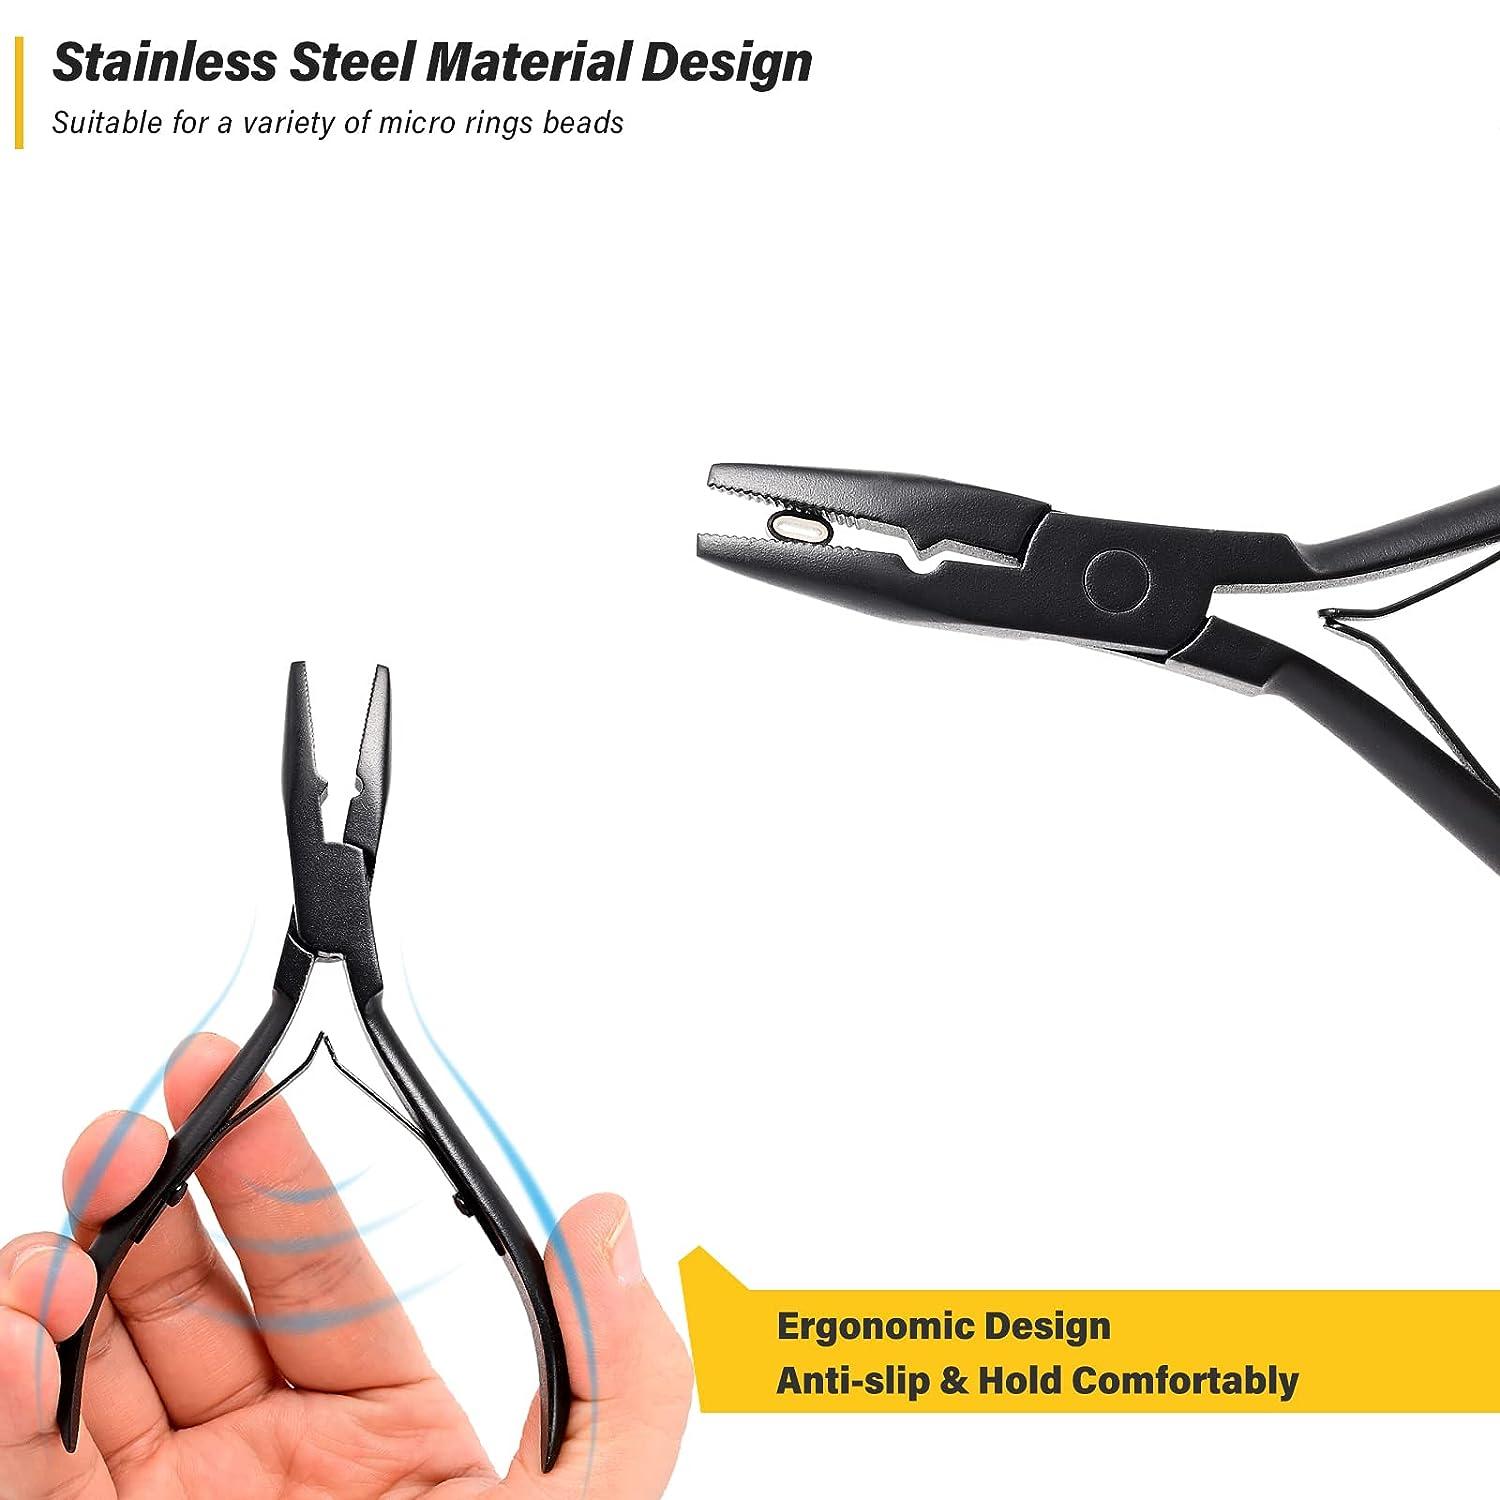 Hair Extension Beading Tool Kit Micro link Bead Closer Plier Hair Ring Loop  Tool